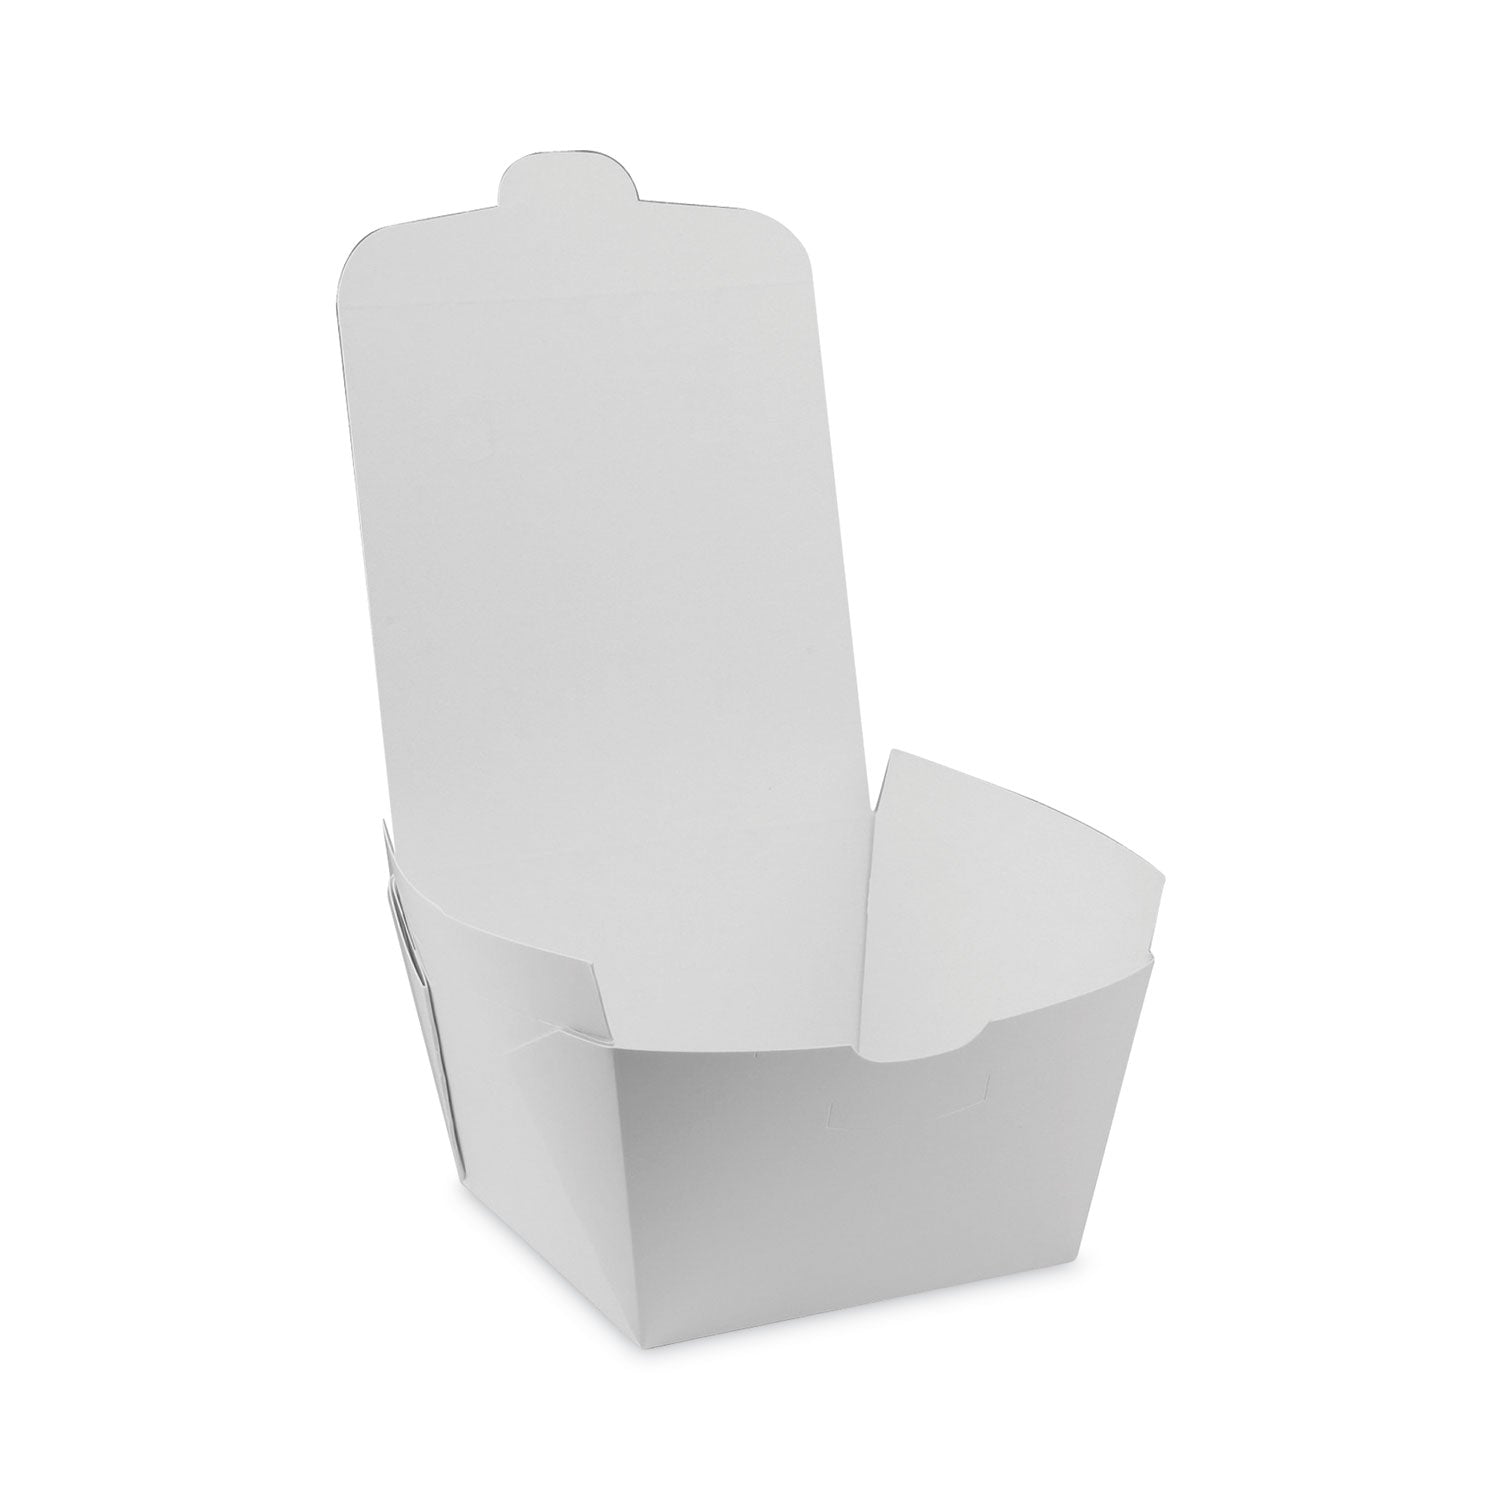 earthchoice-onebox-paper-box-37-oz-45-x-45-x-25-white-312-carton_pctnob01w - 2